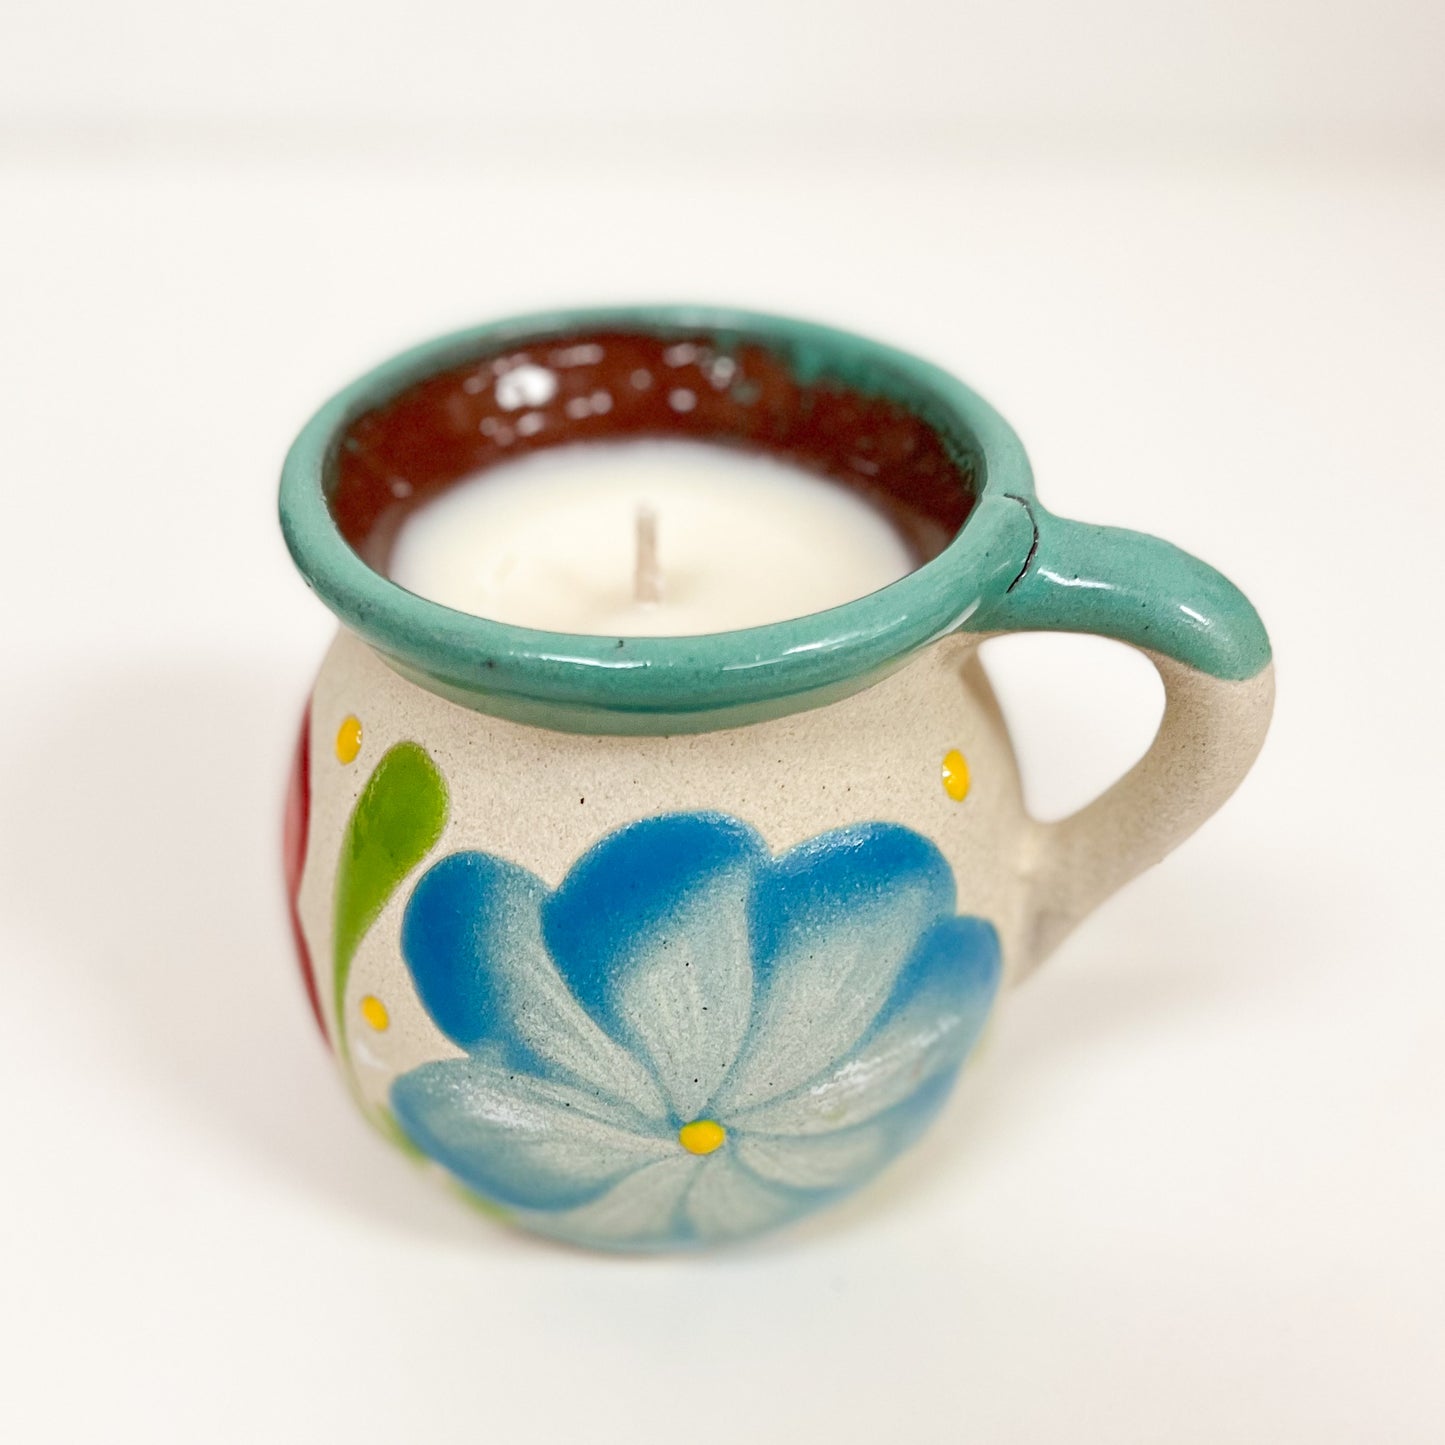 Abuelita’s Hot Chocolate Tazita Candle